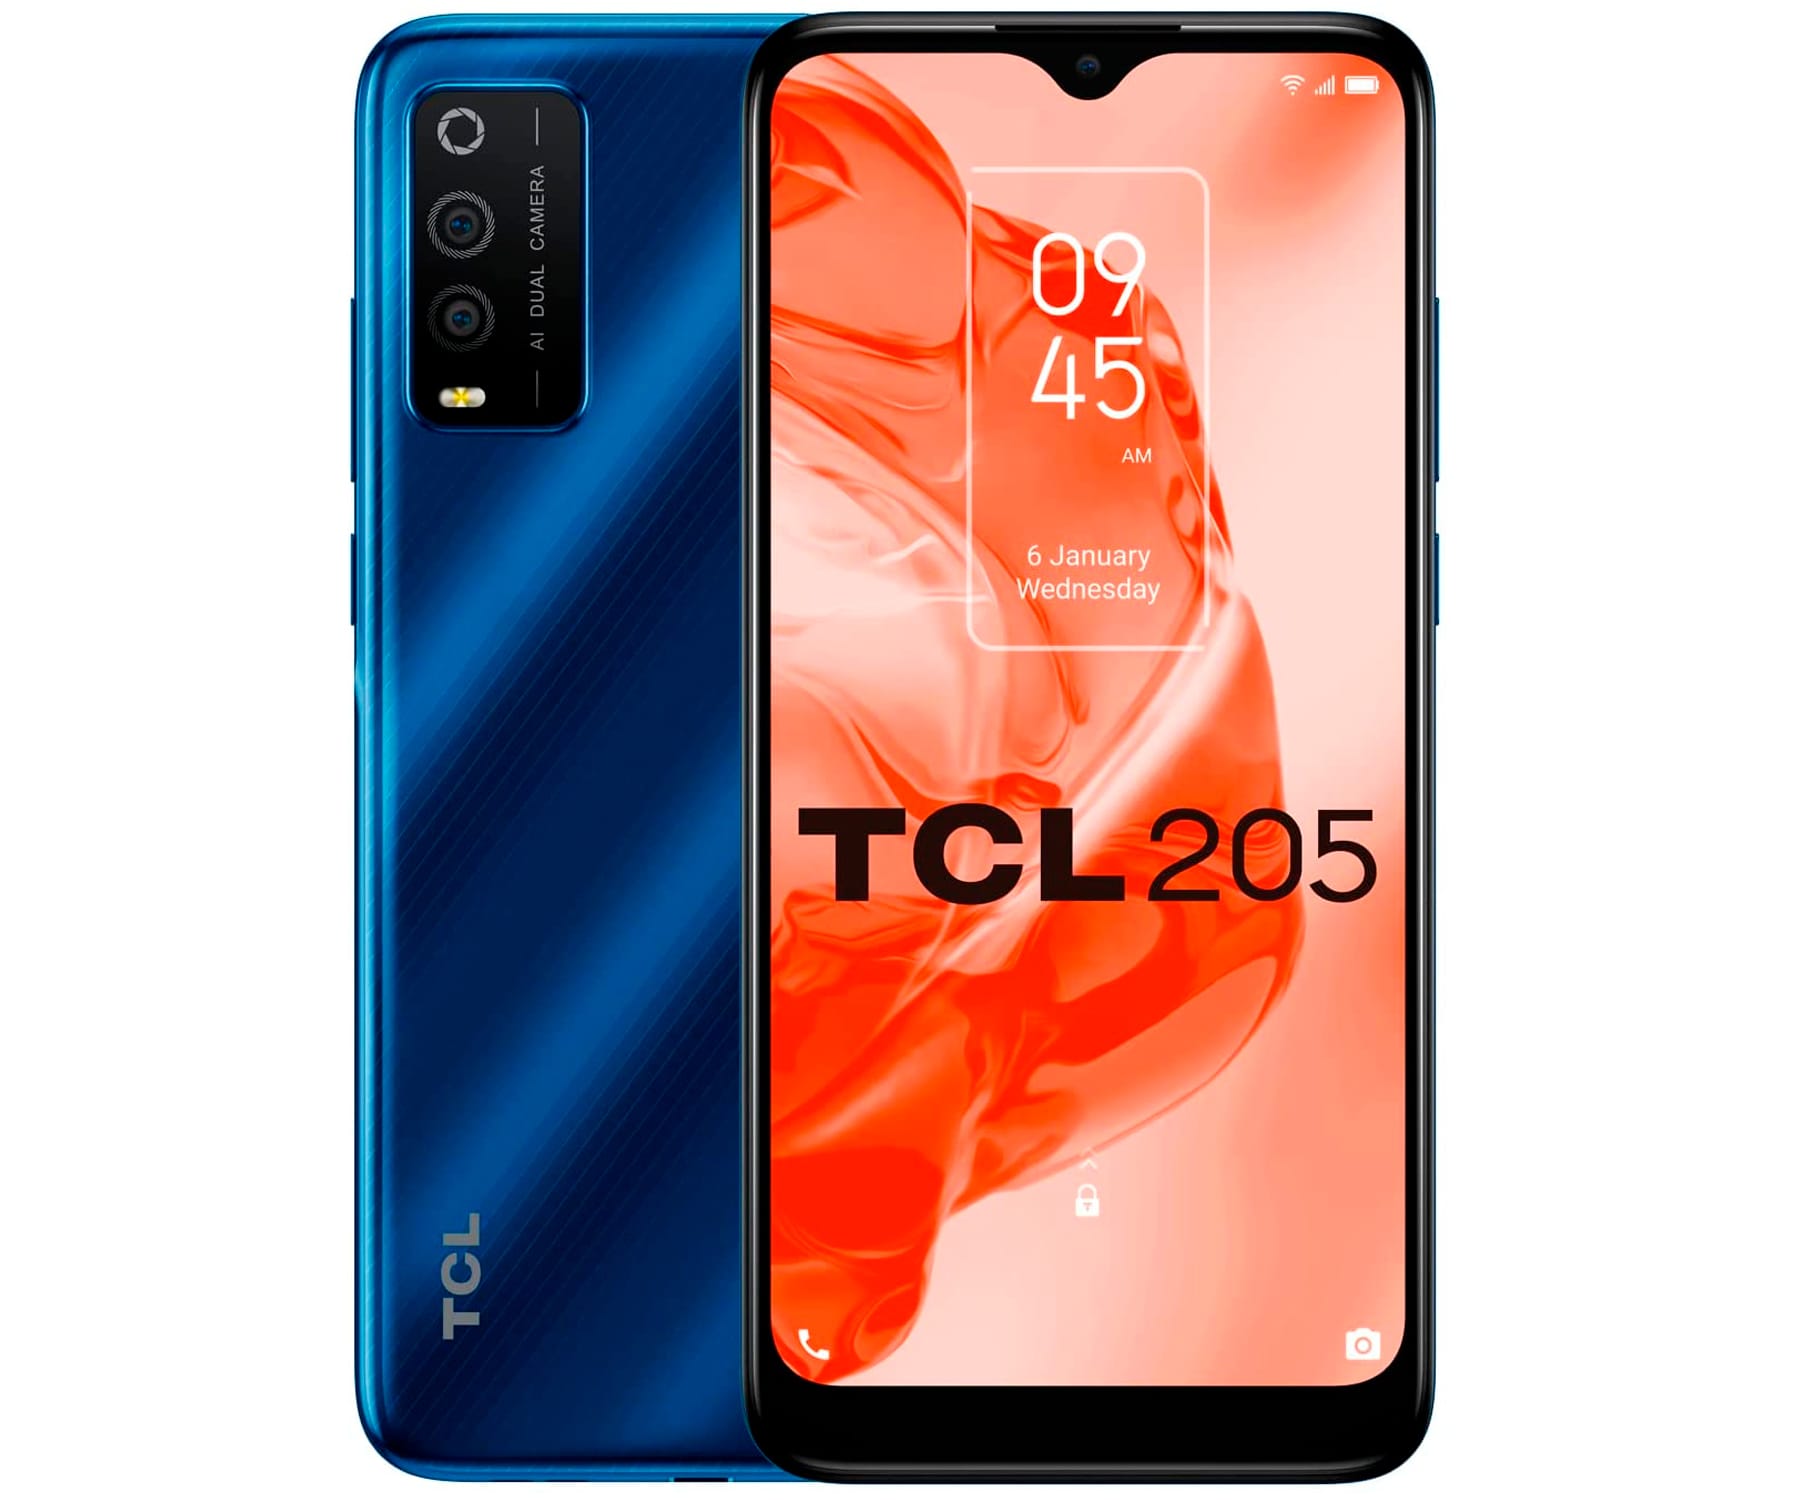 TCL 205 Azul (Atlantic blue) / 2+32GB / 5.22" IPS / Dual SIM